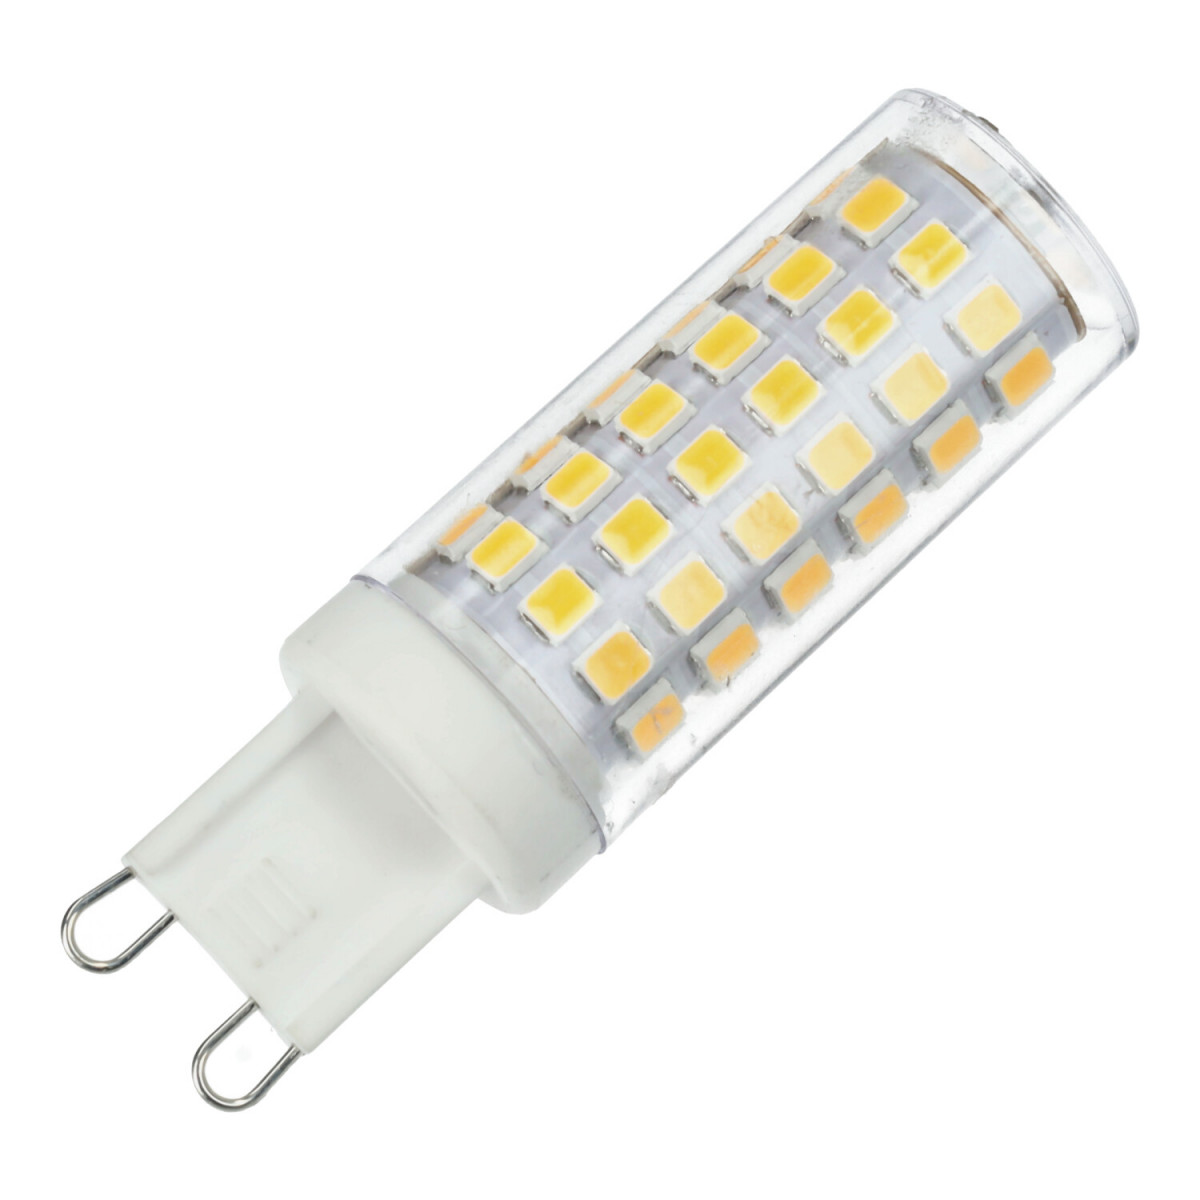 G9 5W lampadina LED bi-pin 350 lumens luce bianca